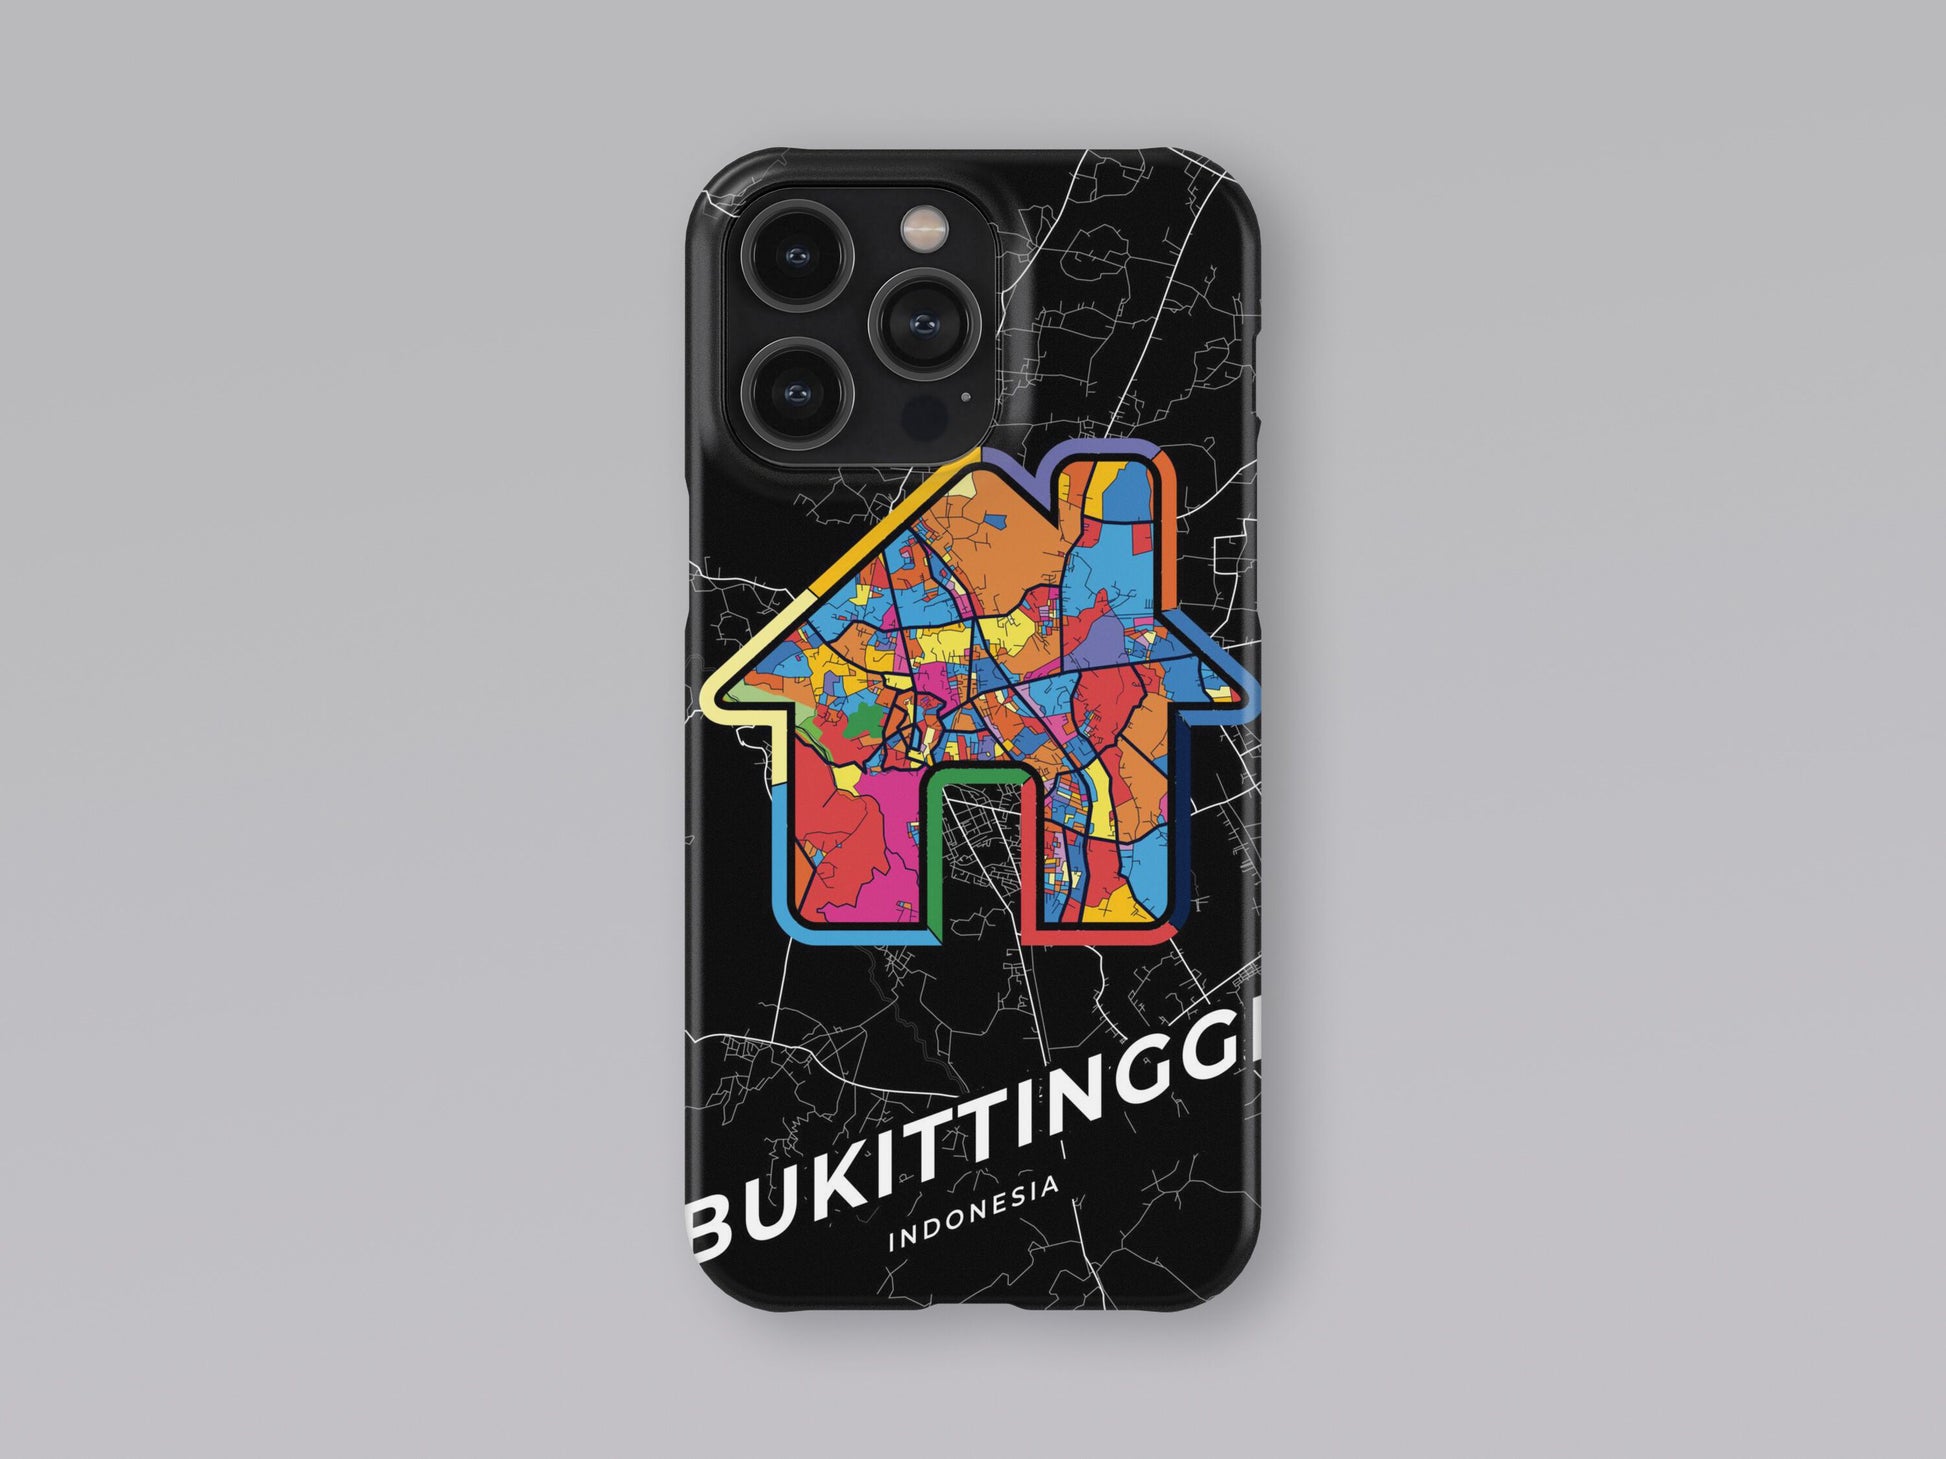 Bukittinggi Indonesia slim phone case with colorful icon. Birthday, wedding or housewarming gift. Couple match cases. 3